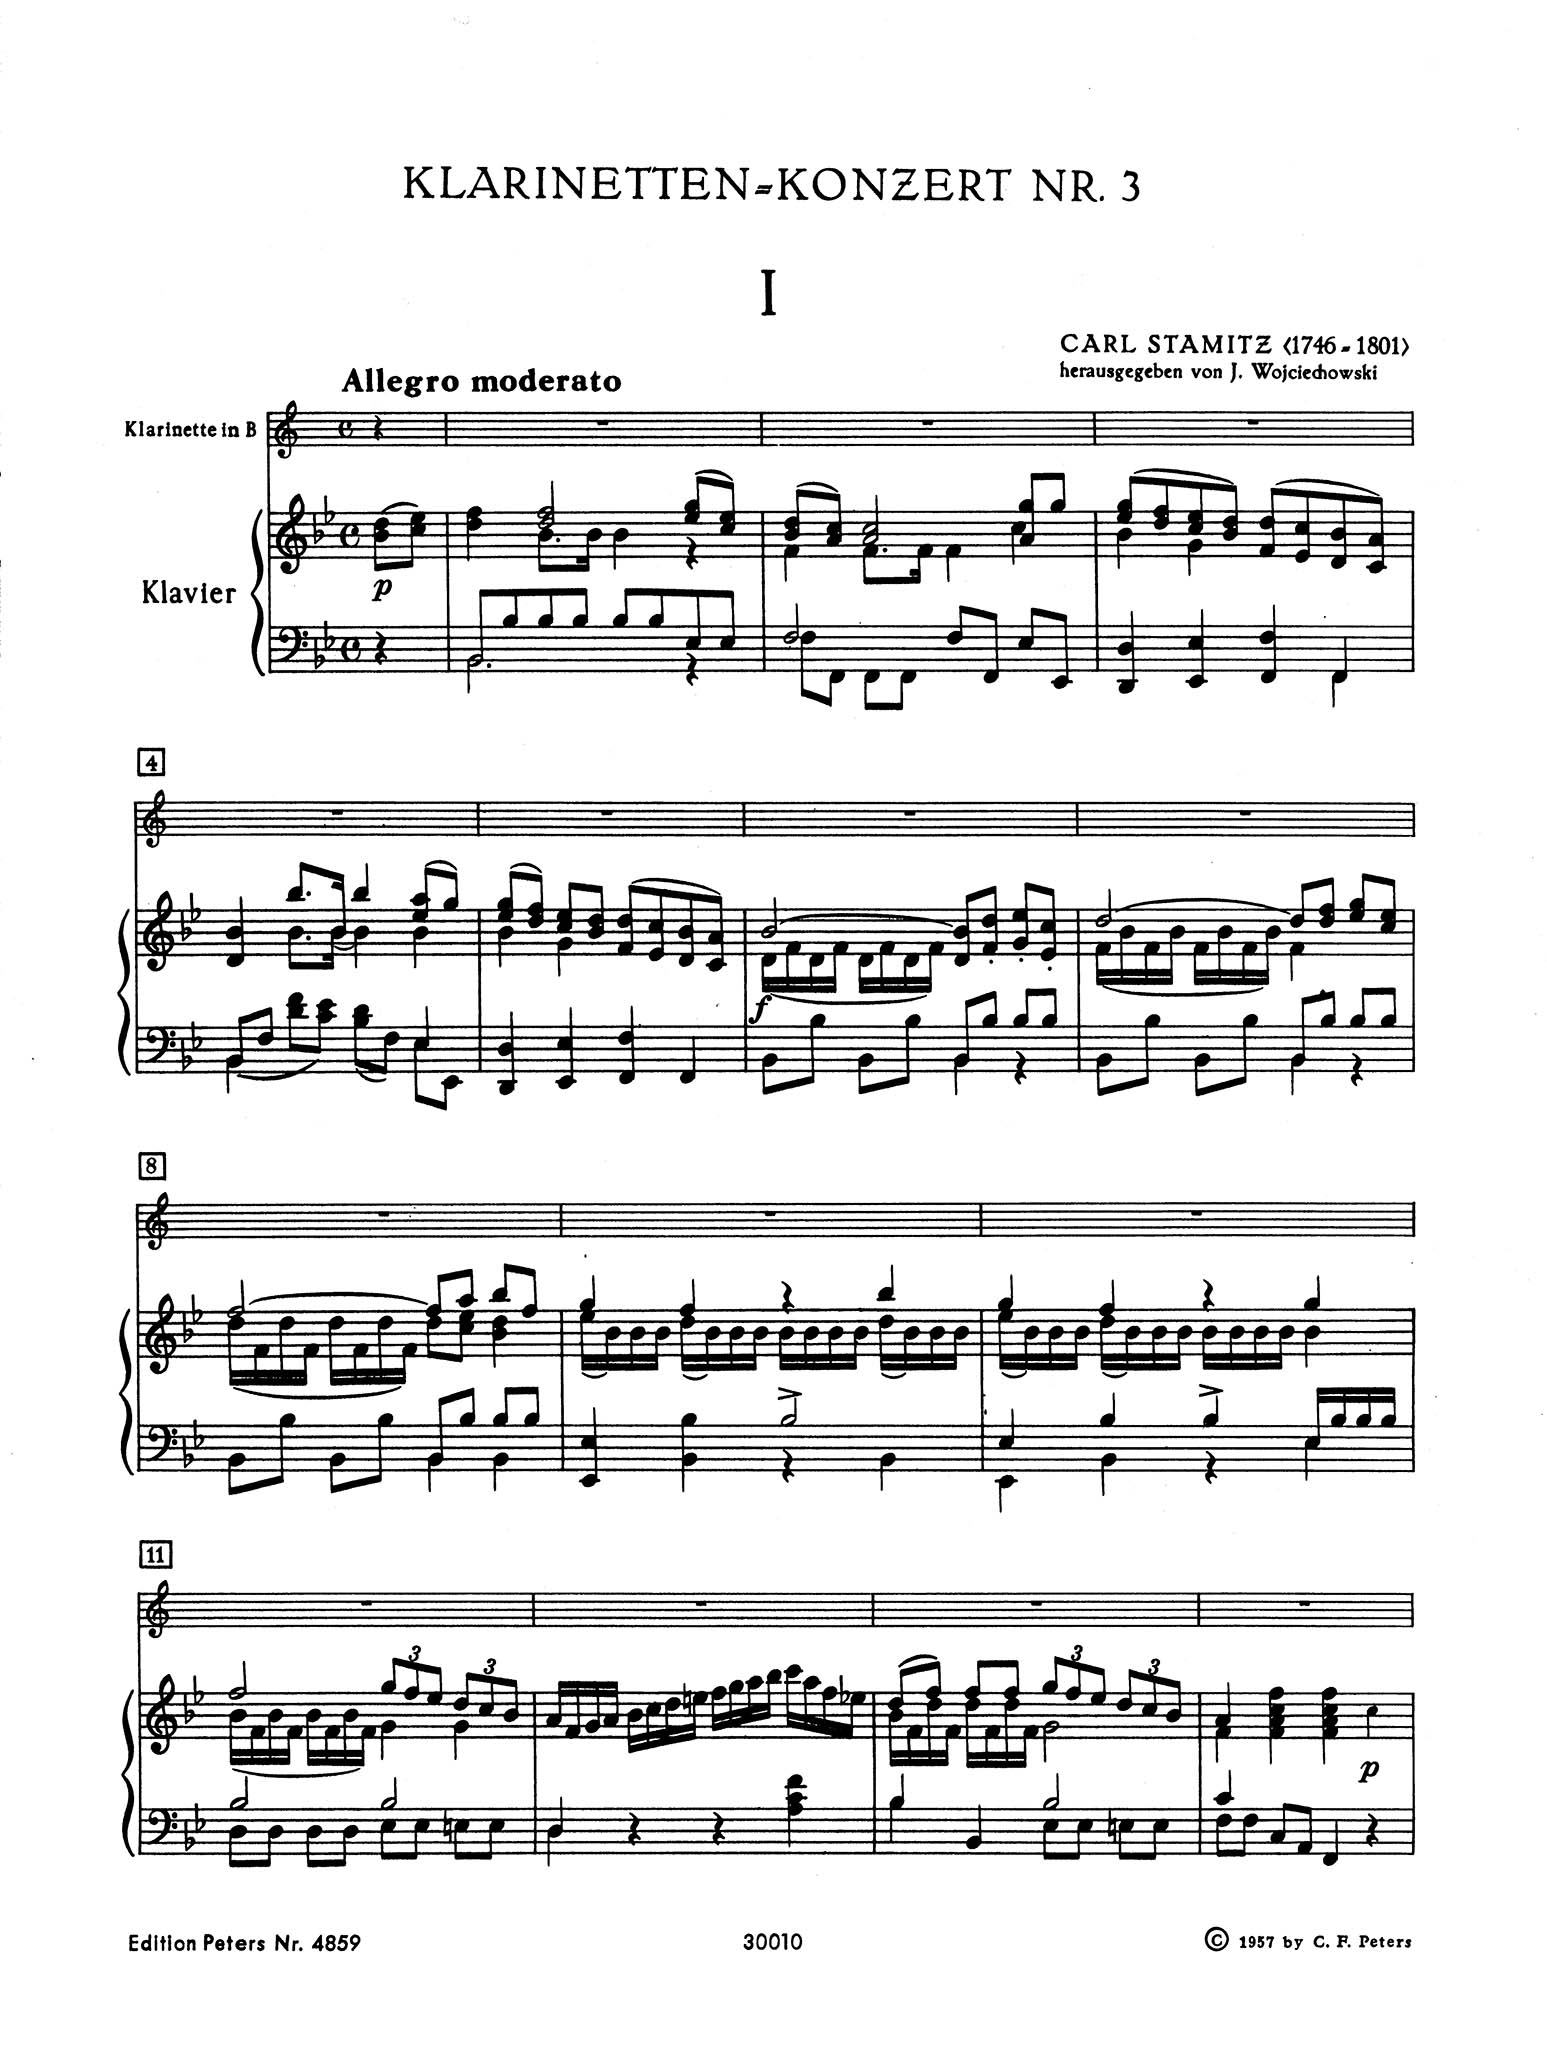 Clarinet Concerto No. 7 (Kaiser) in B-flat Major - Movement 1